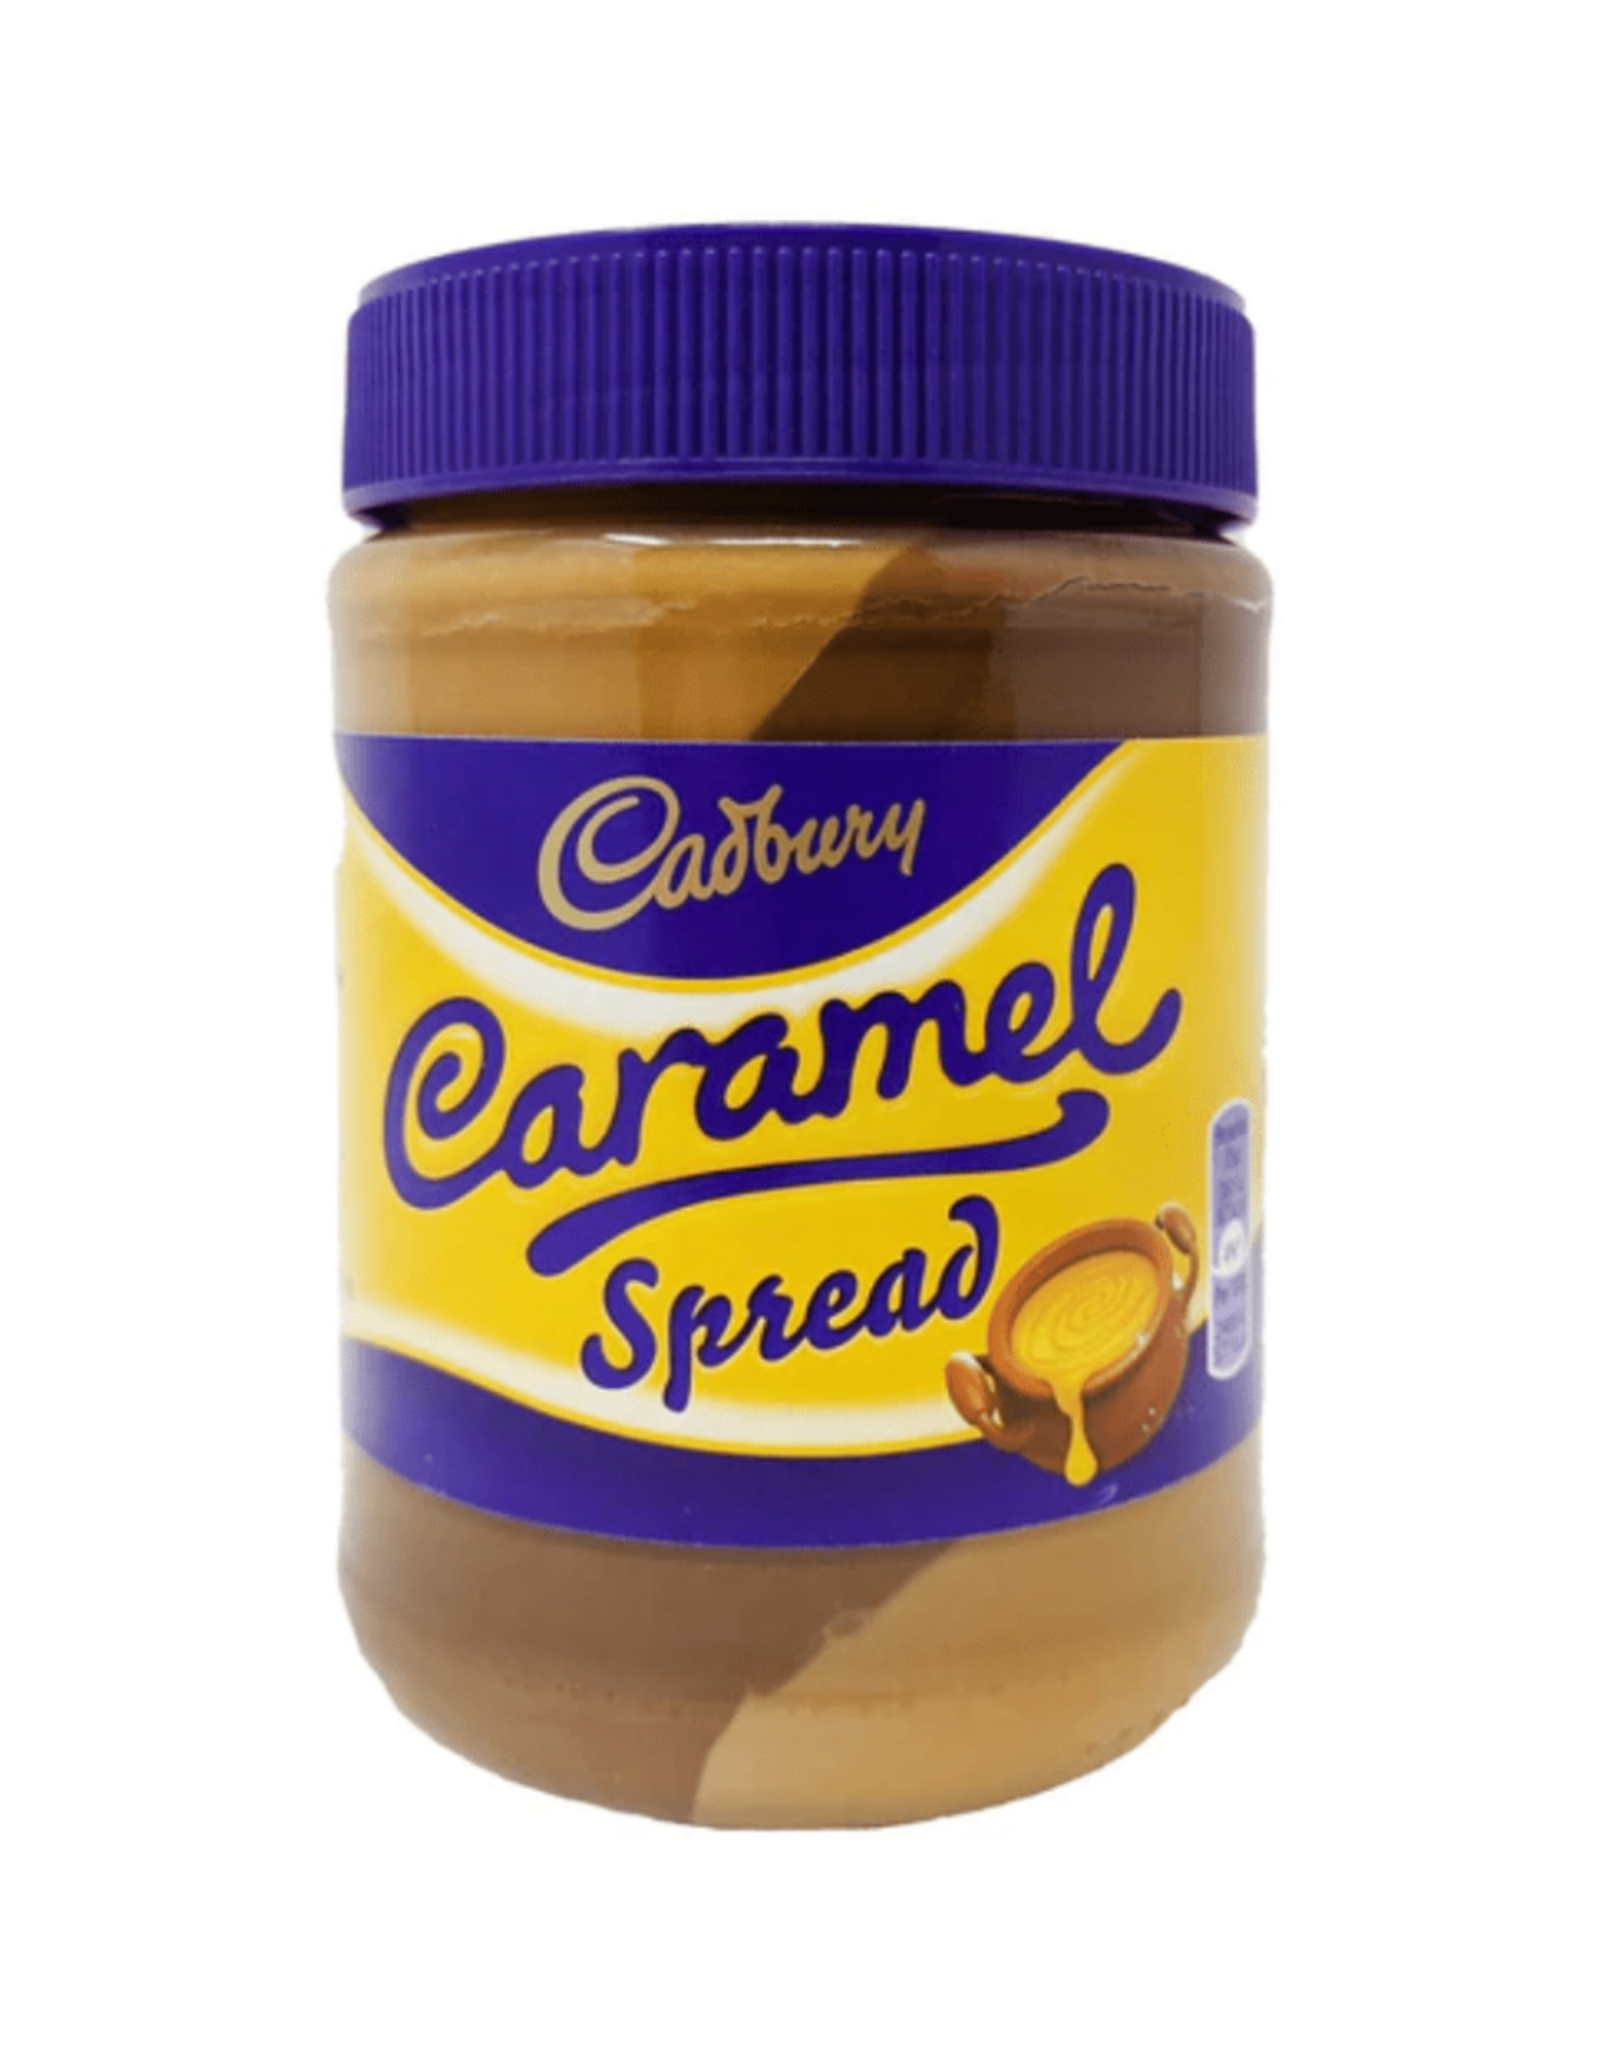 Cadbury Caramel spread British